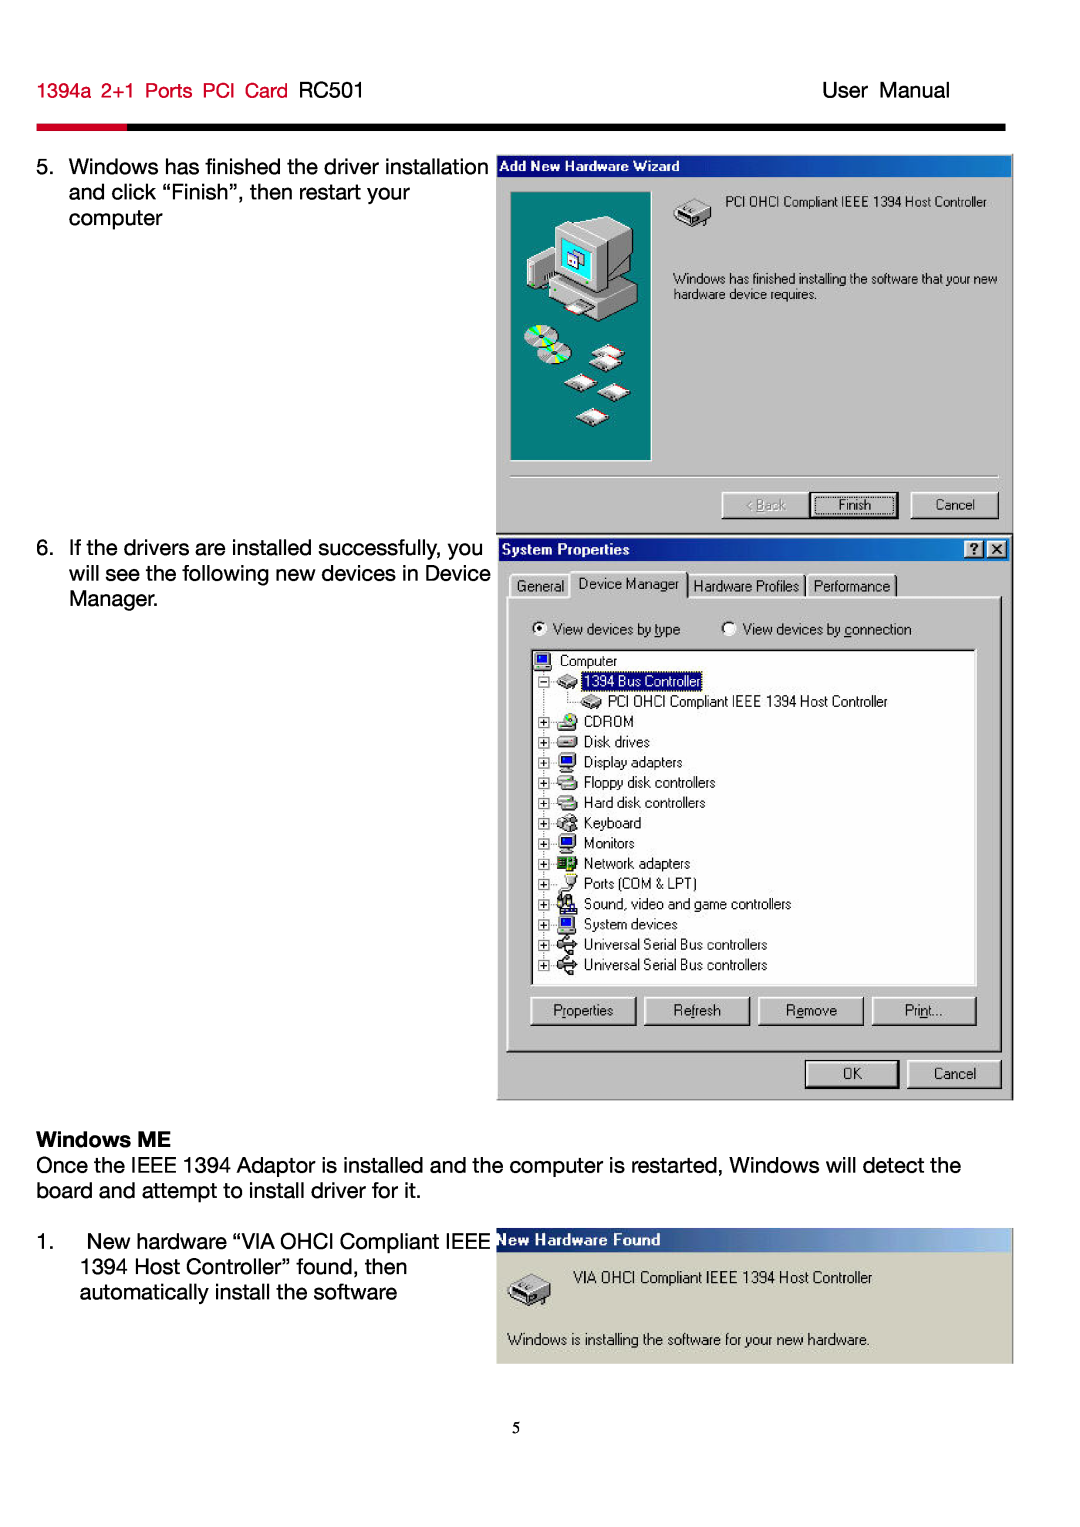 Rosewill RC501 user manual Windows ME 